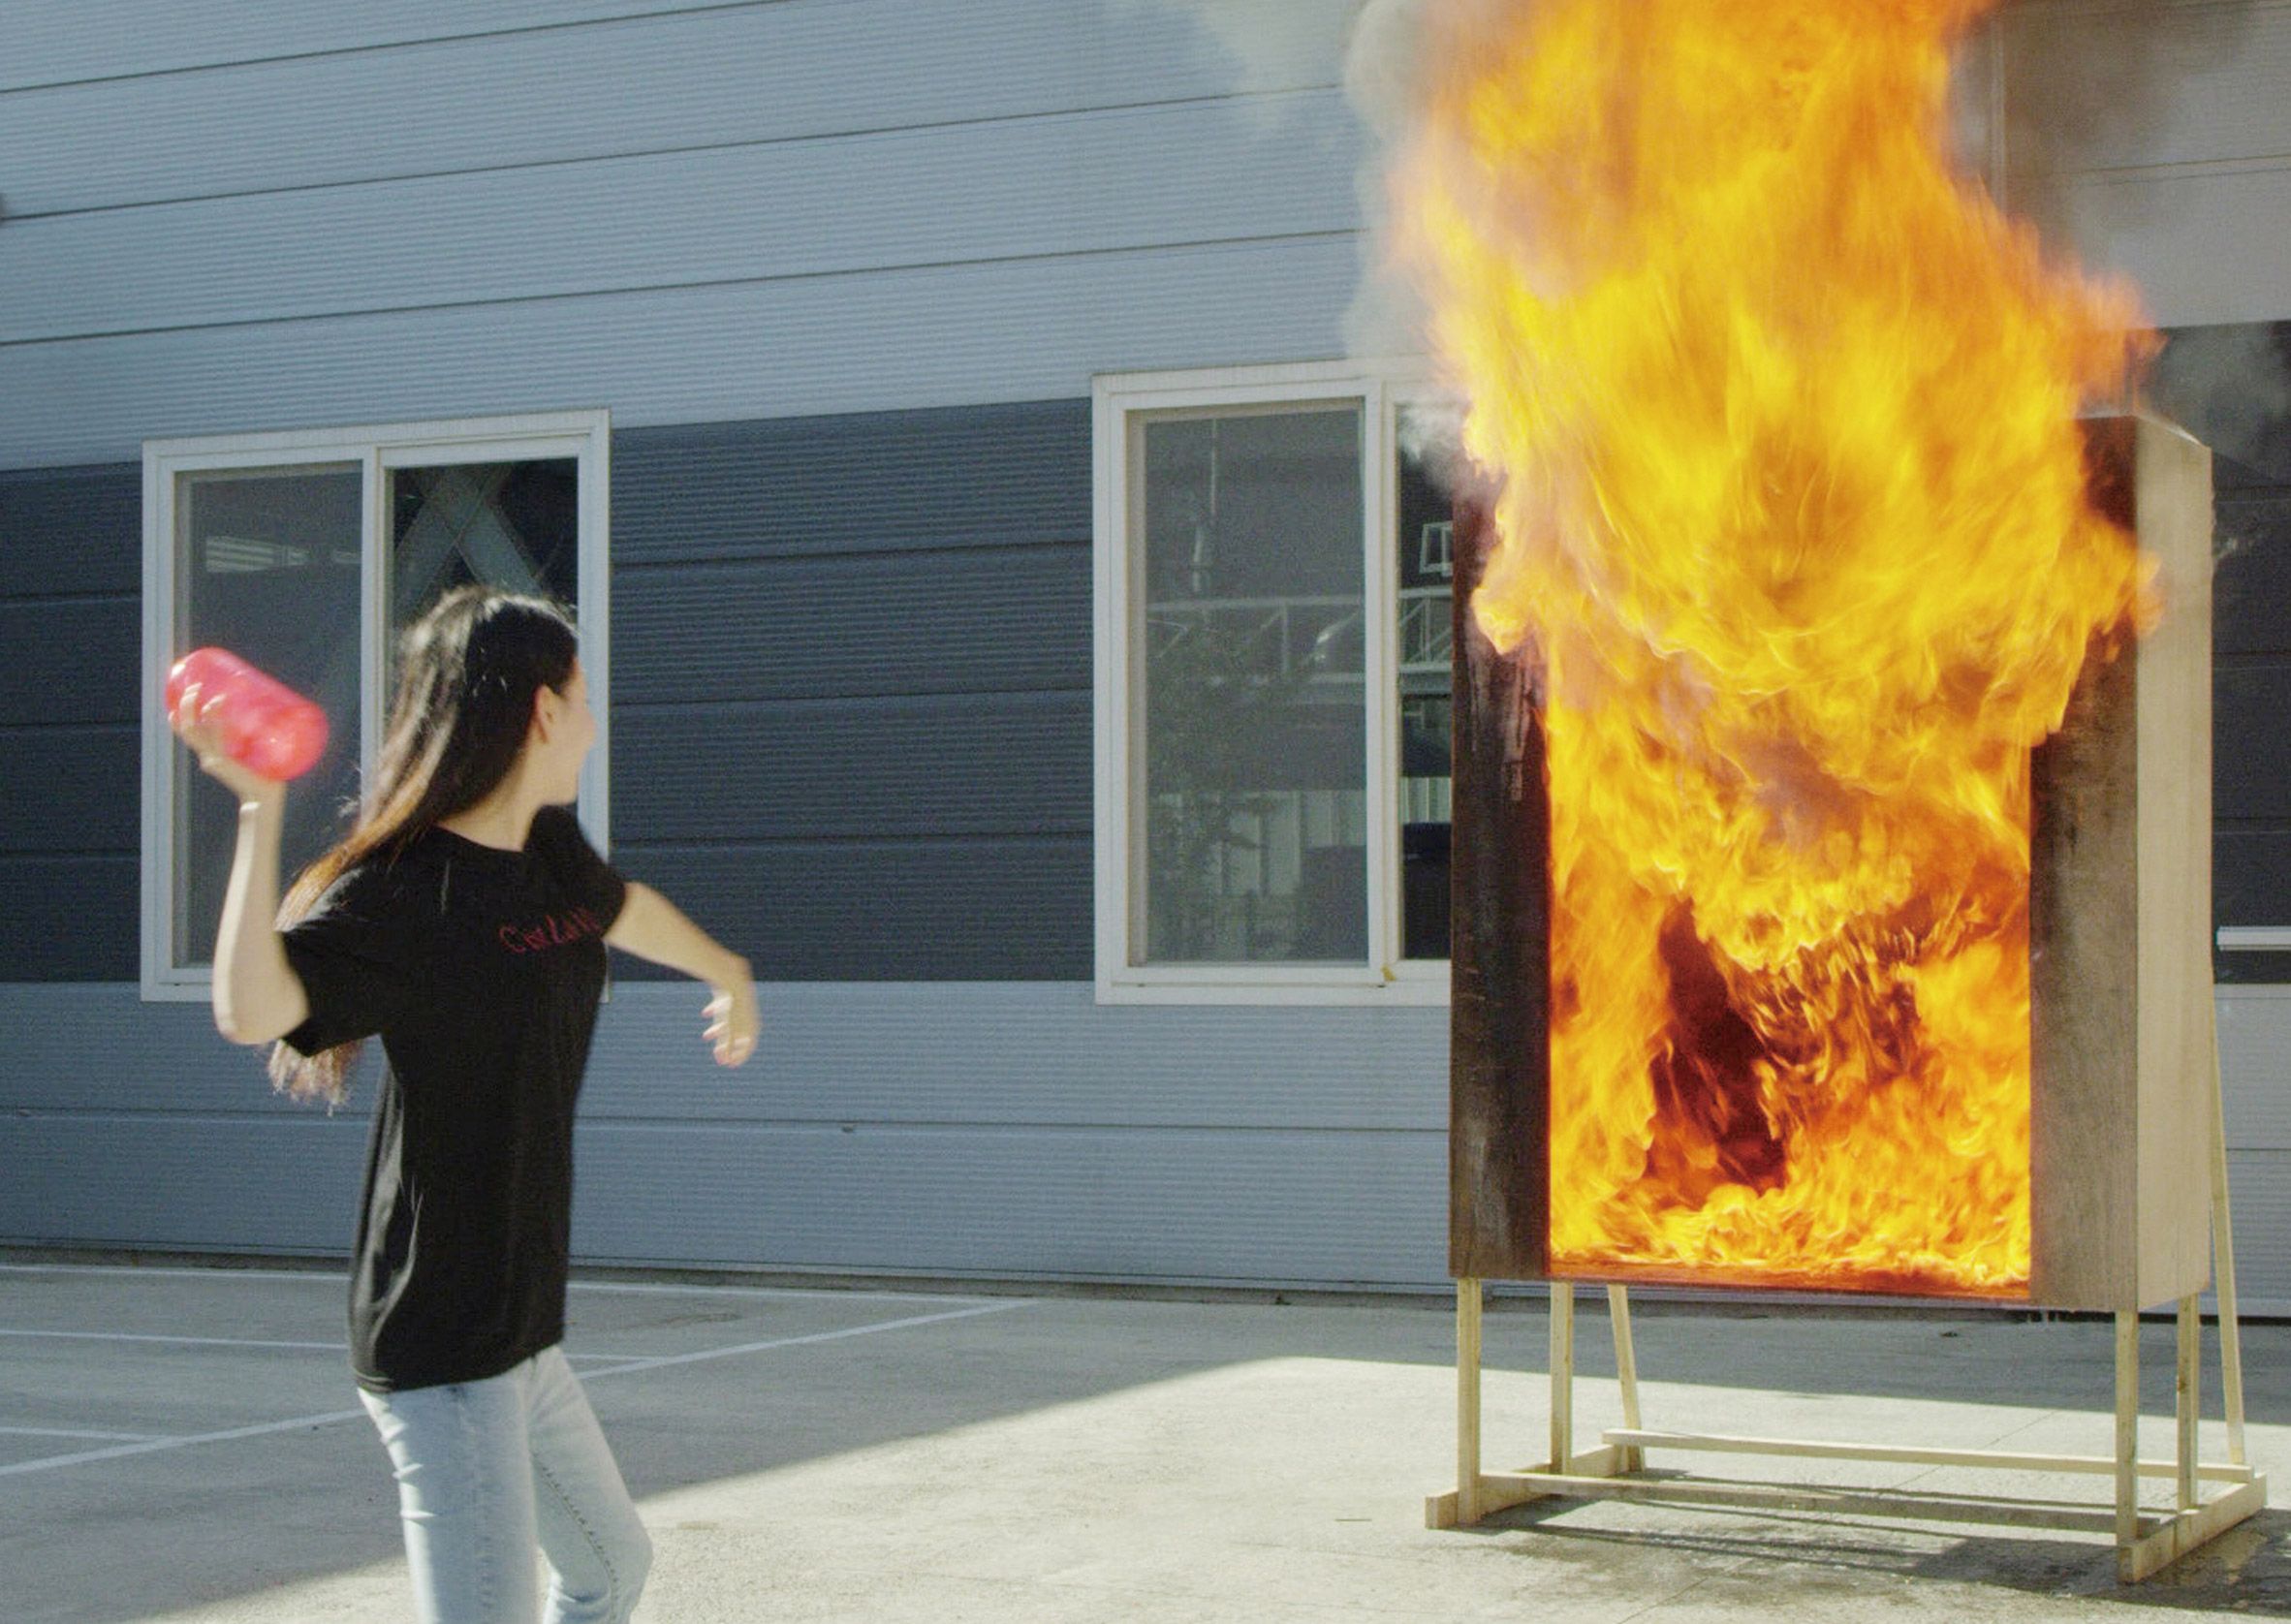 Samsung's 'Firevase' a Smashing Fire Extinguisher